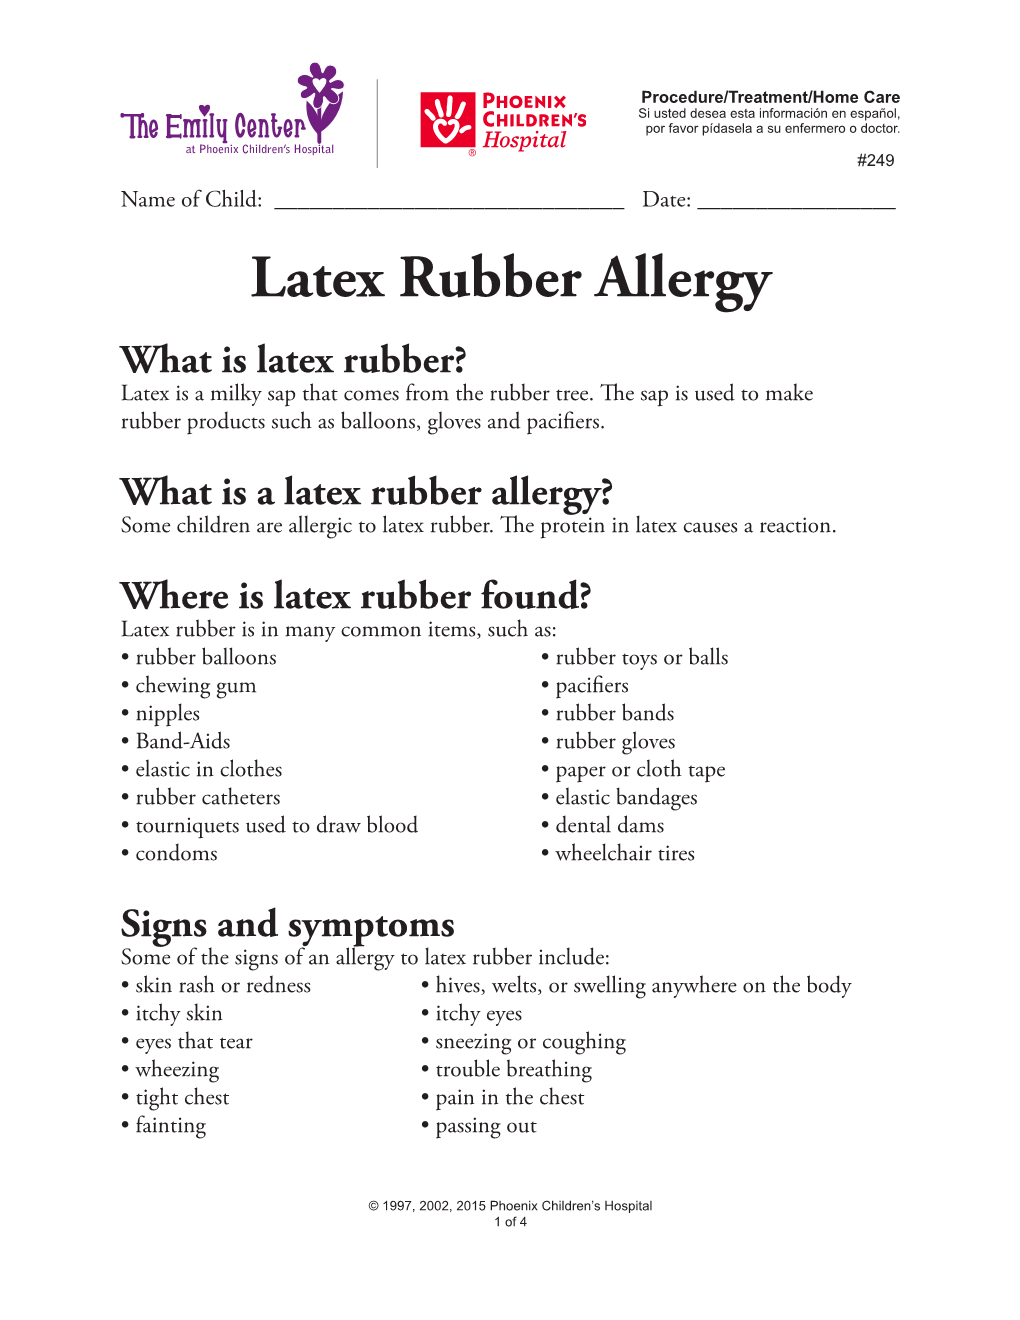 Latex Rubber Allergy #249